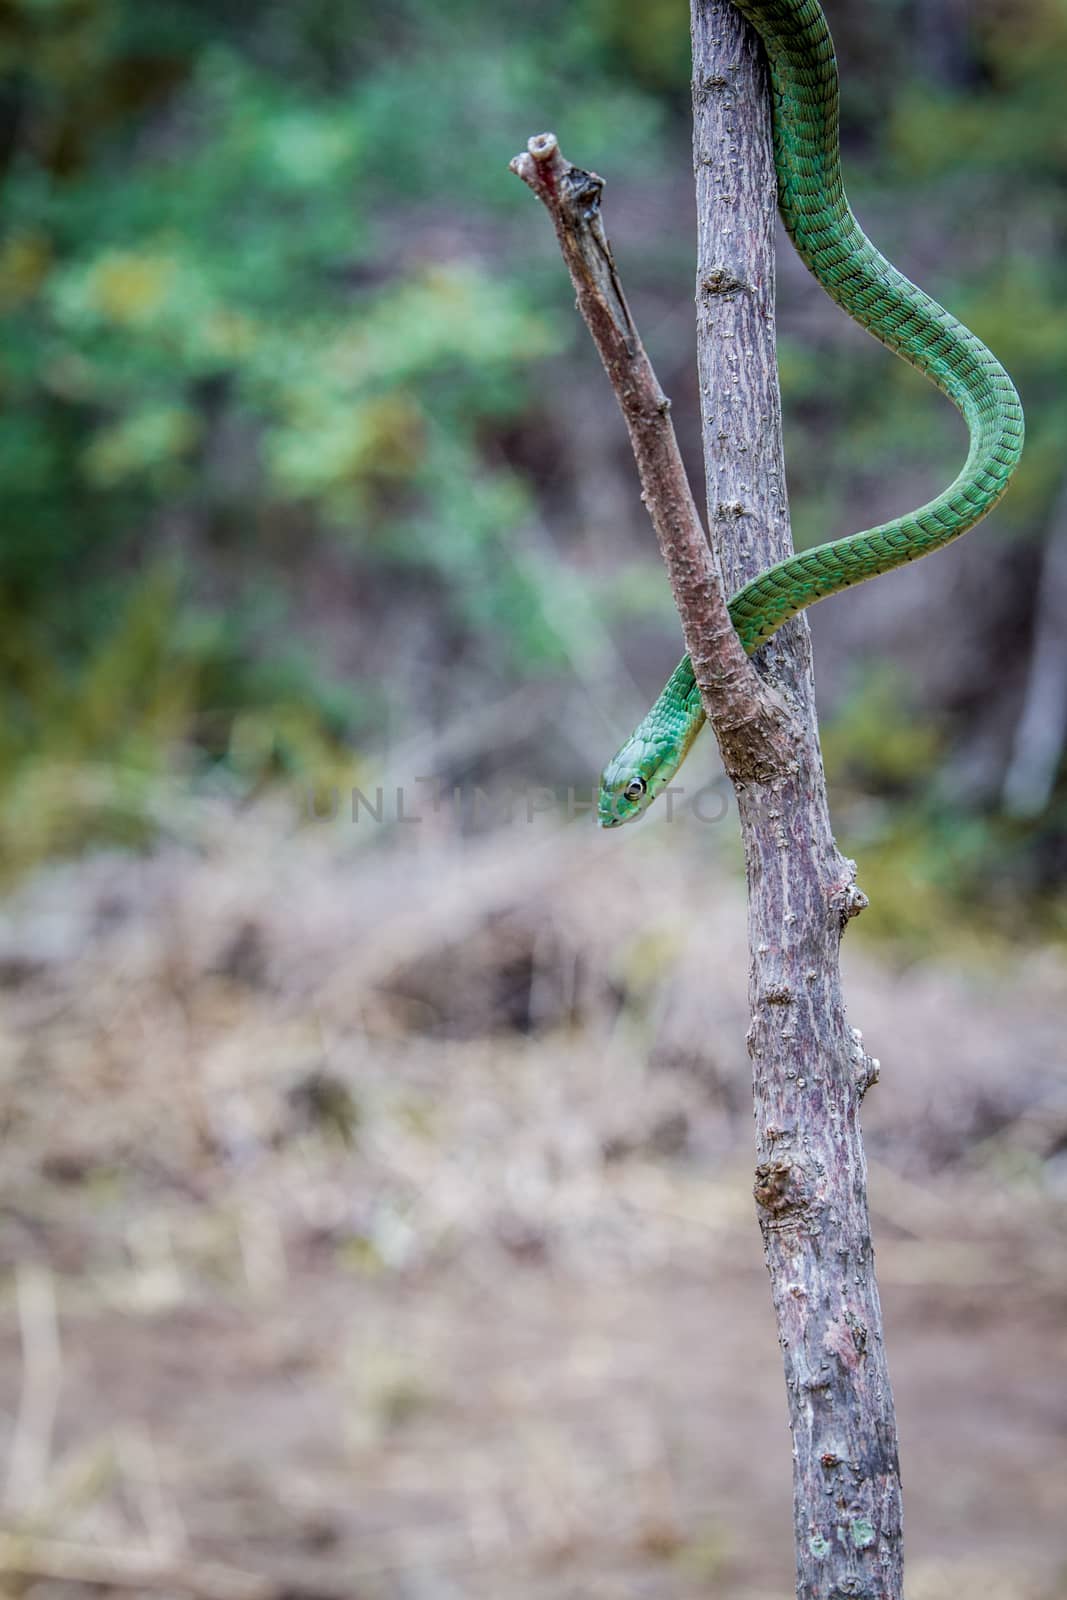 Green mamba on a branch by Simoneemanphotography